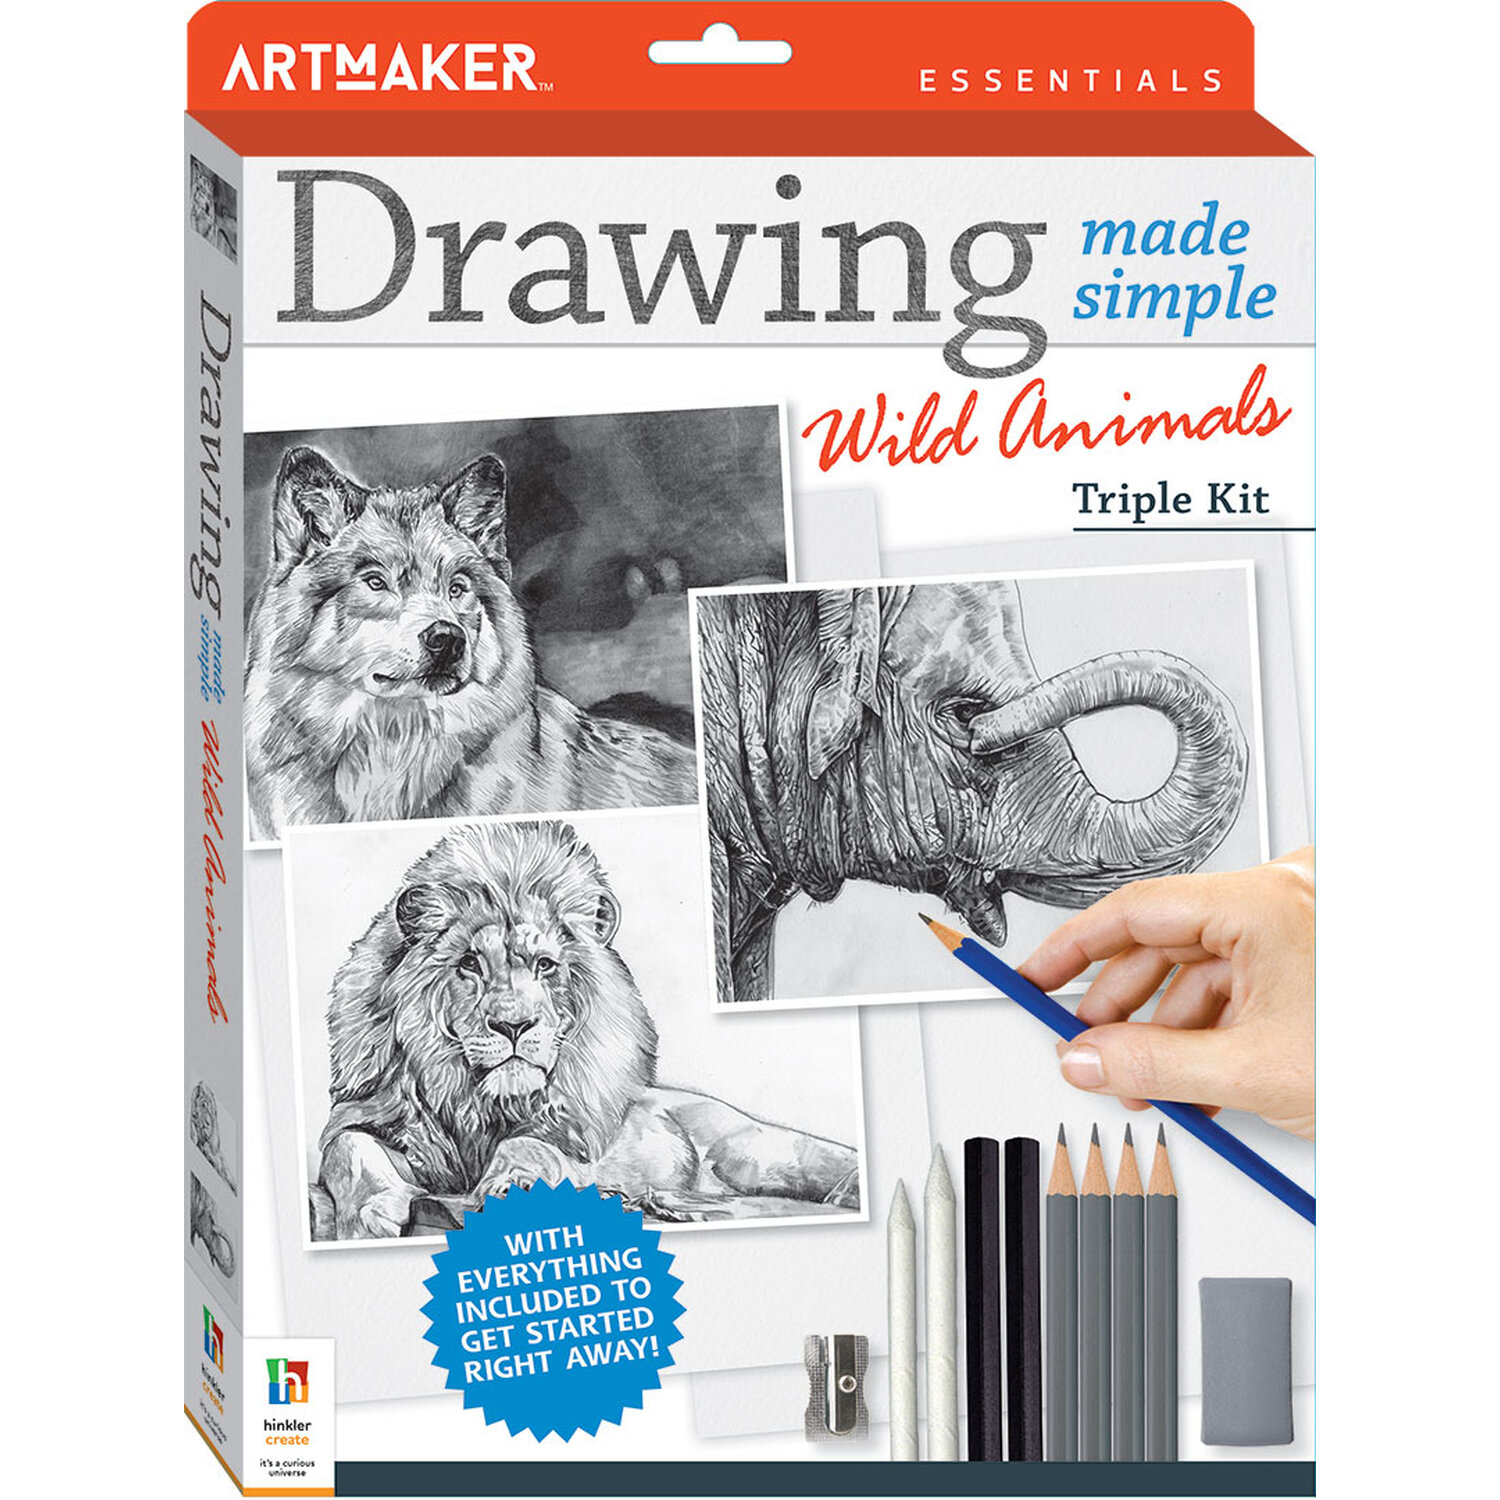 Drawing Made Simple Triple Kit - Wild Animals Image